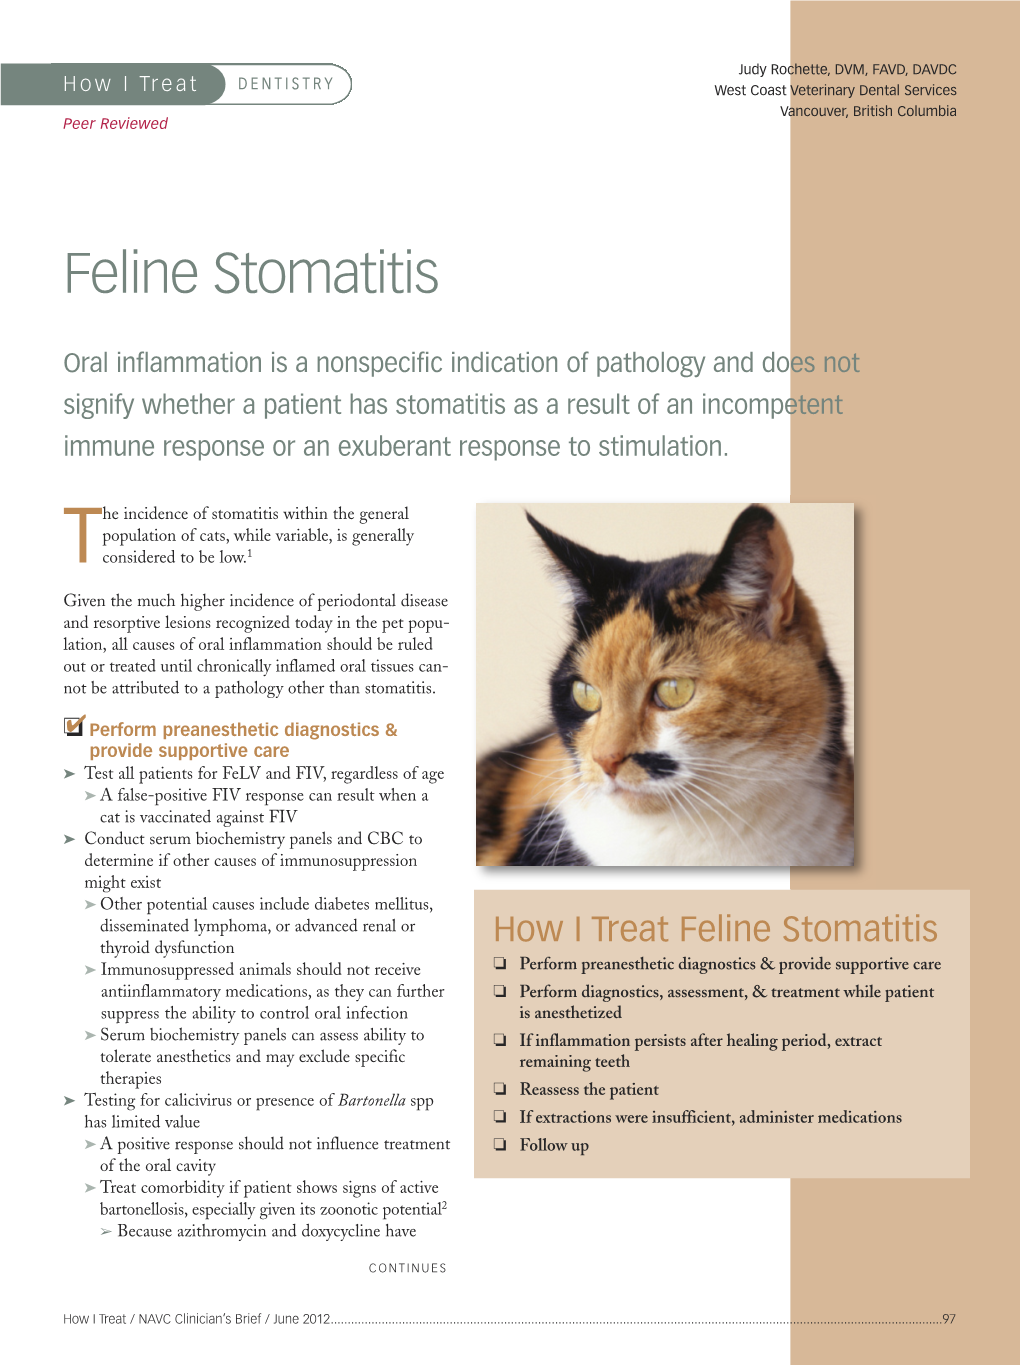 Feline Stomatitis